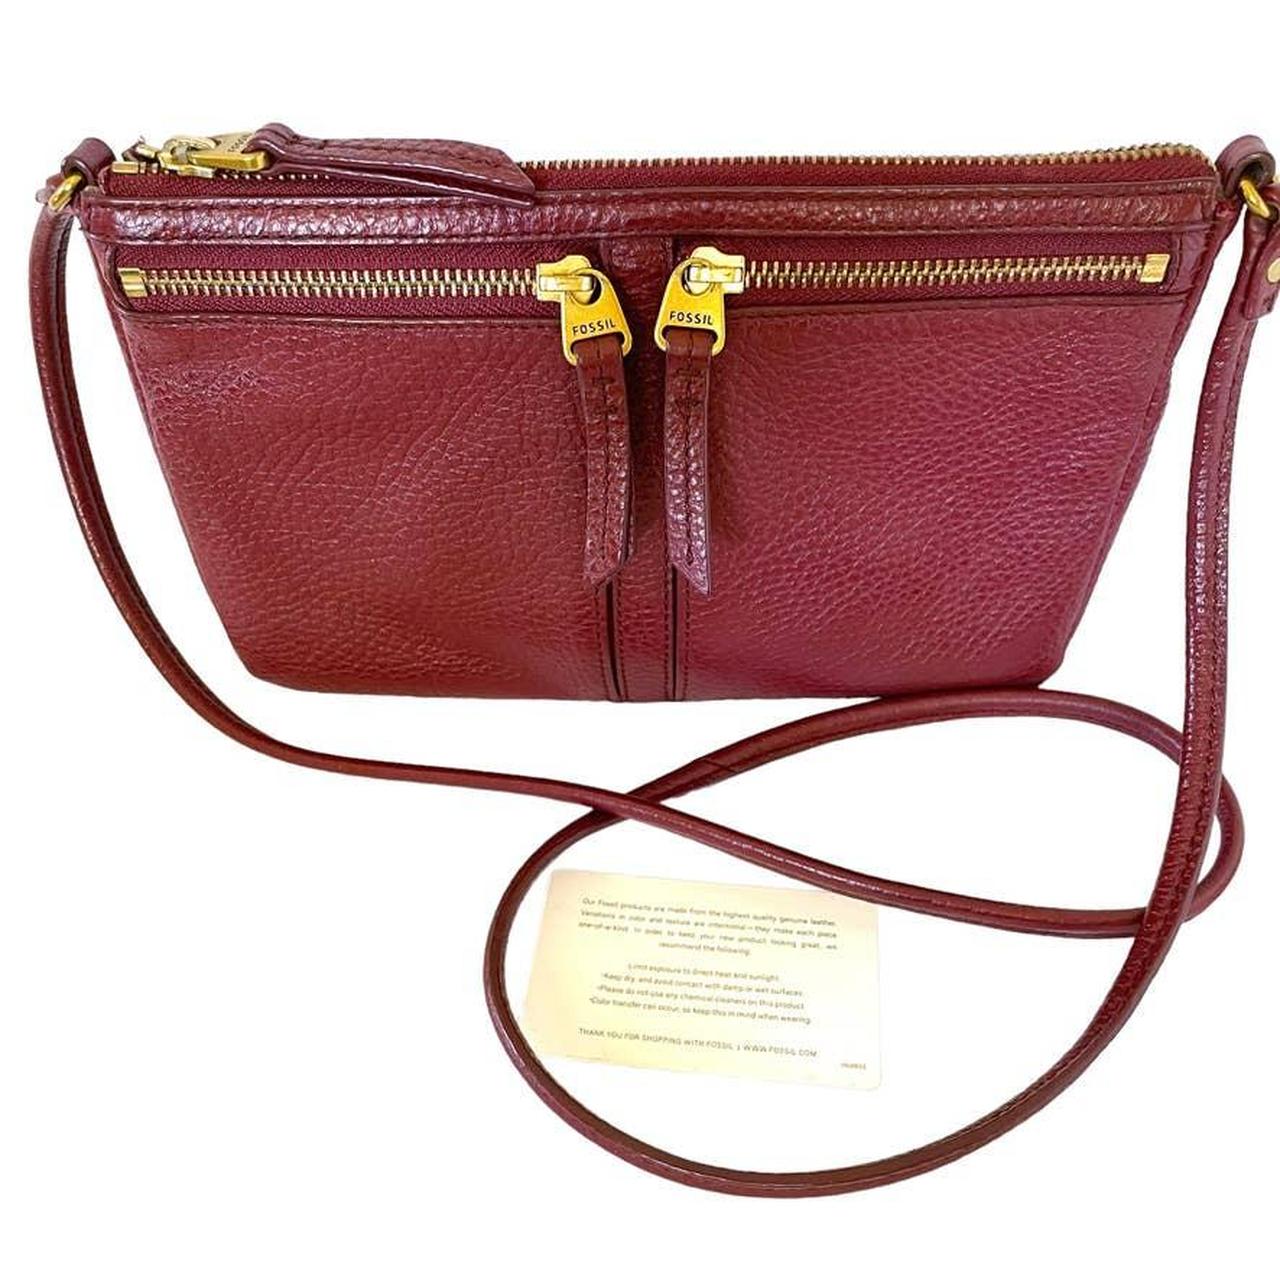 Buy FOSSIL Red Leather Crossbody Handbag Purse at Ubuy India